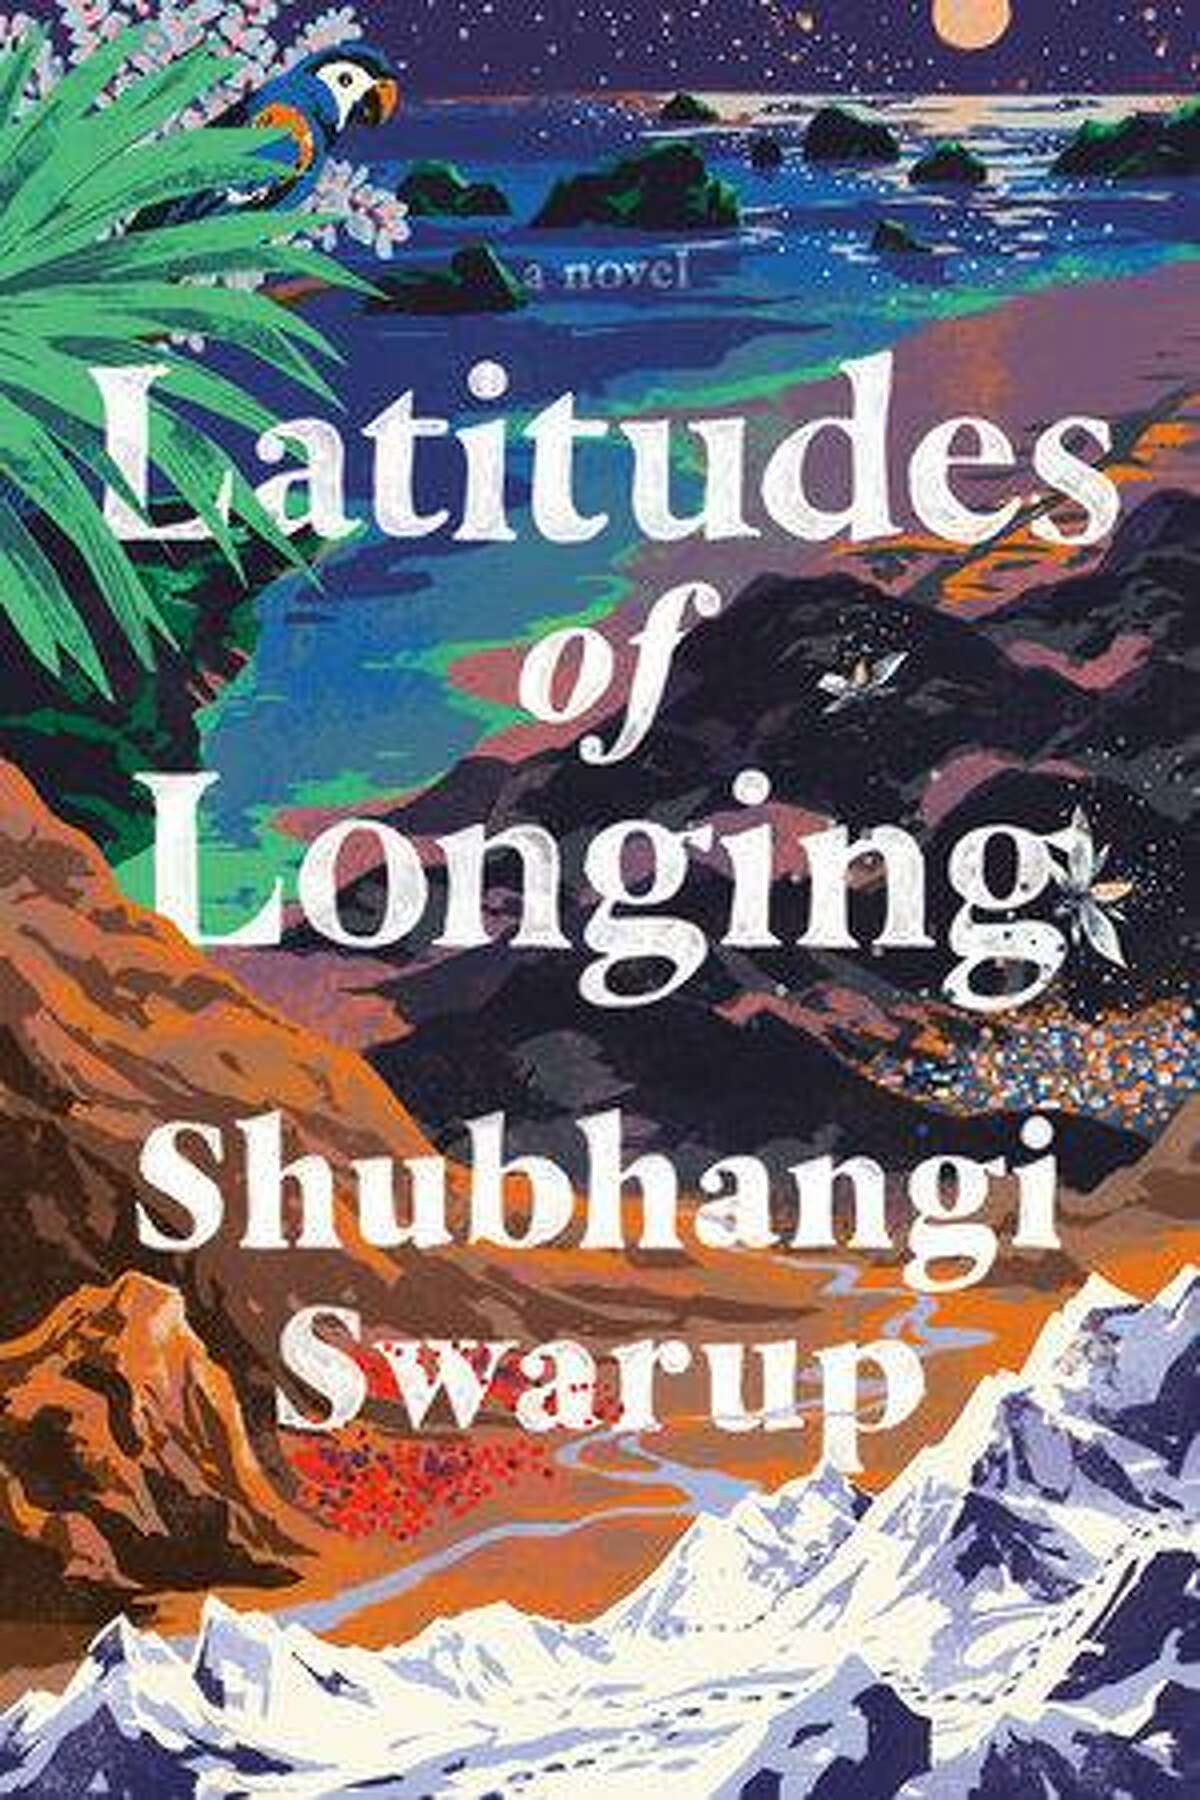 “Latitudes of Longing” is Shubhangi Swarup's debut novel.